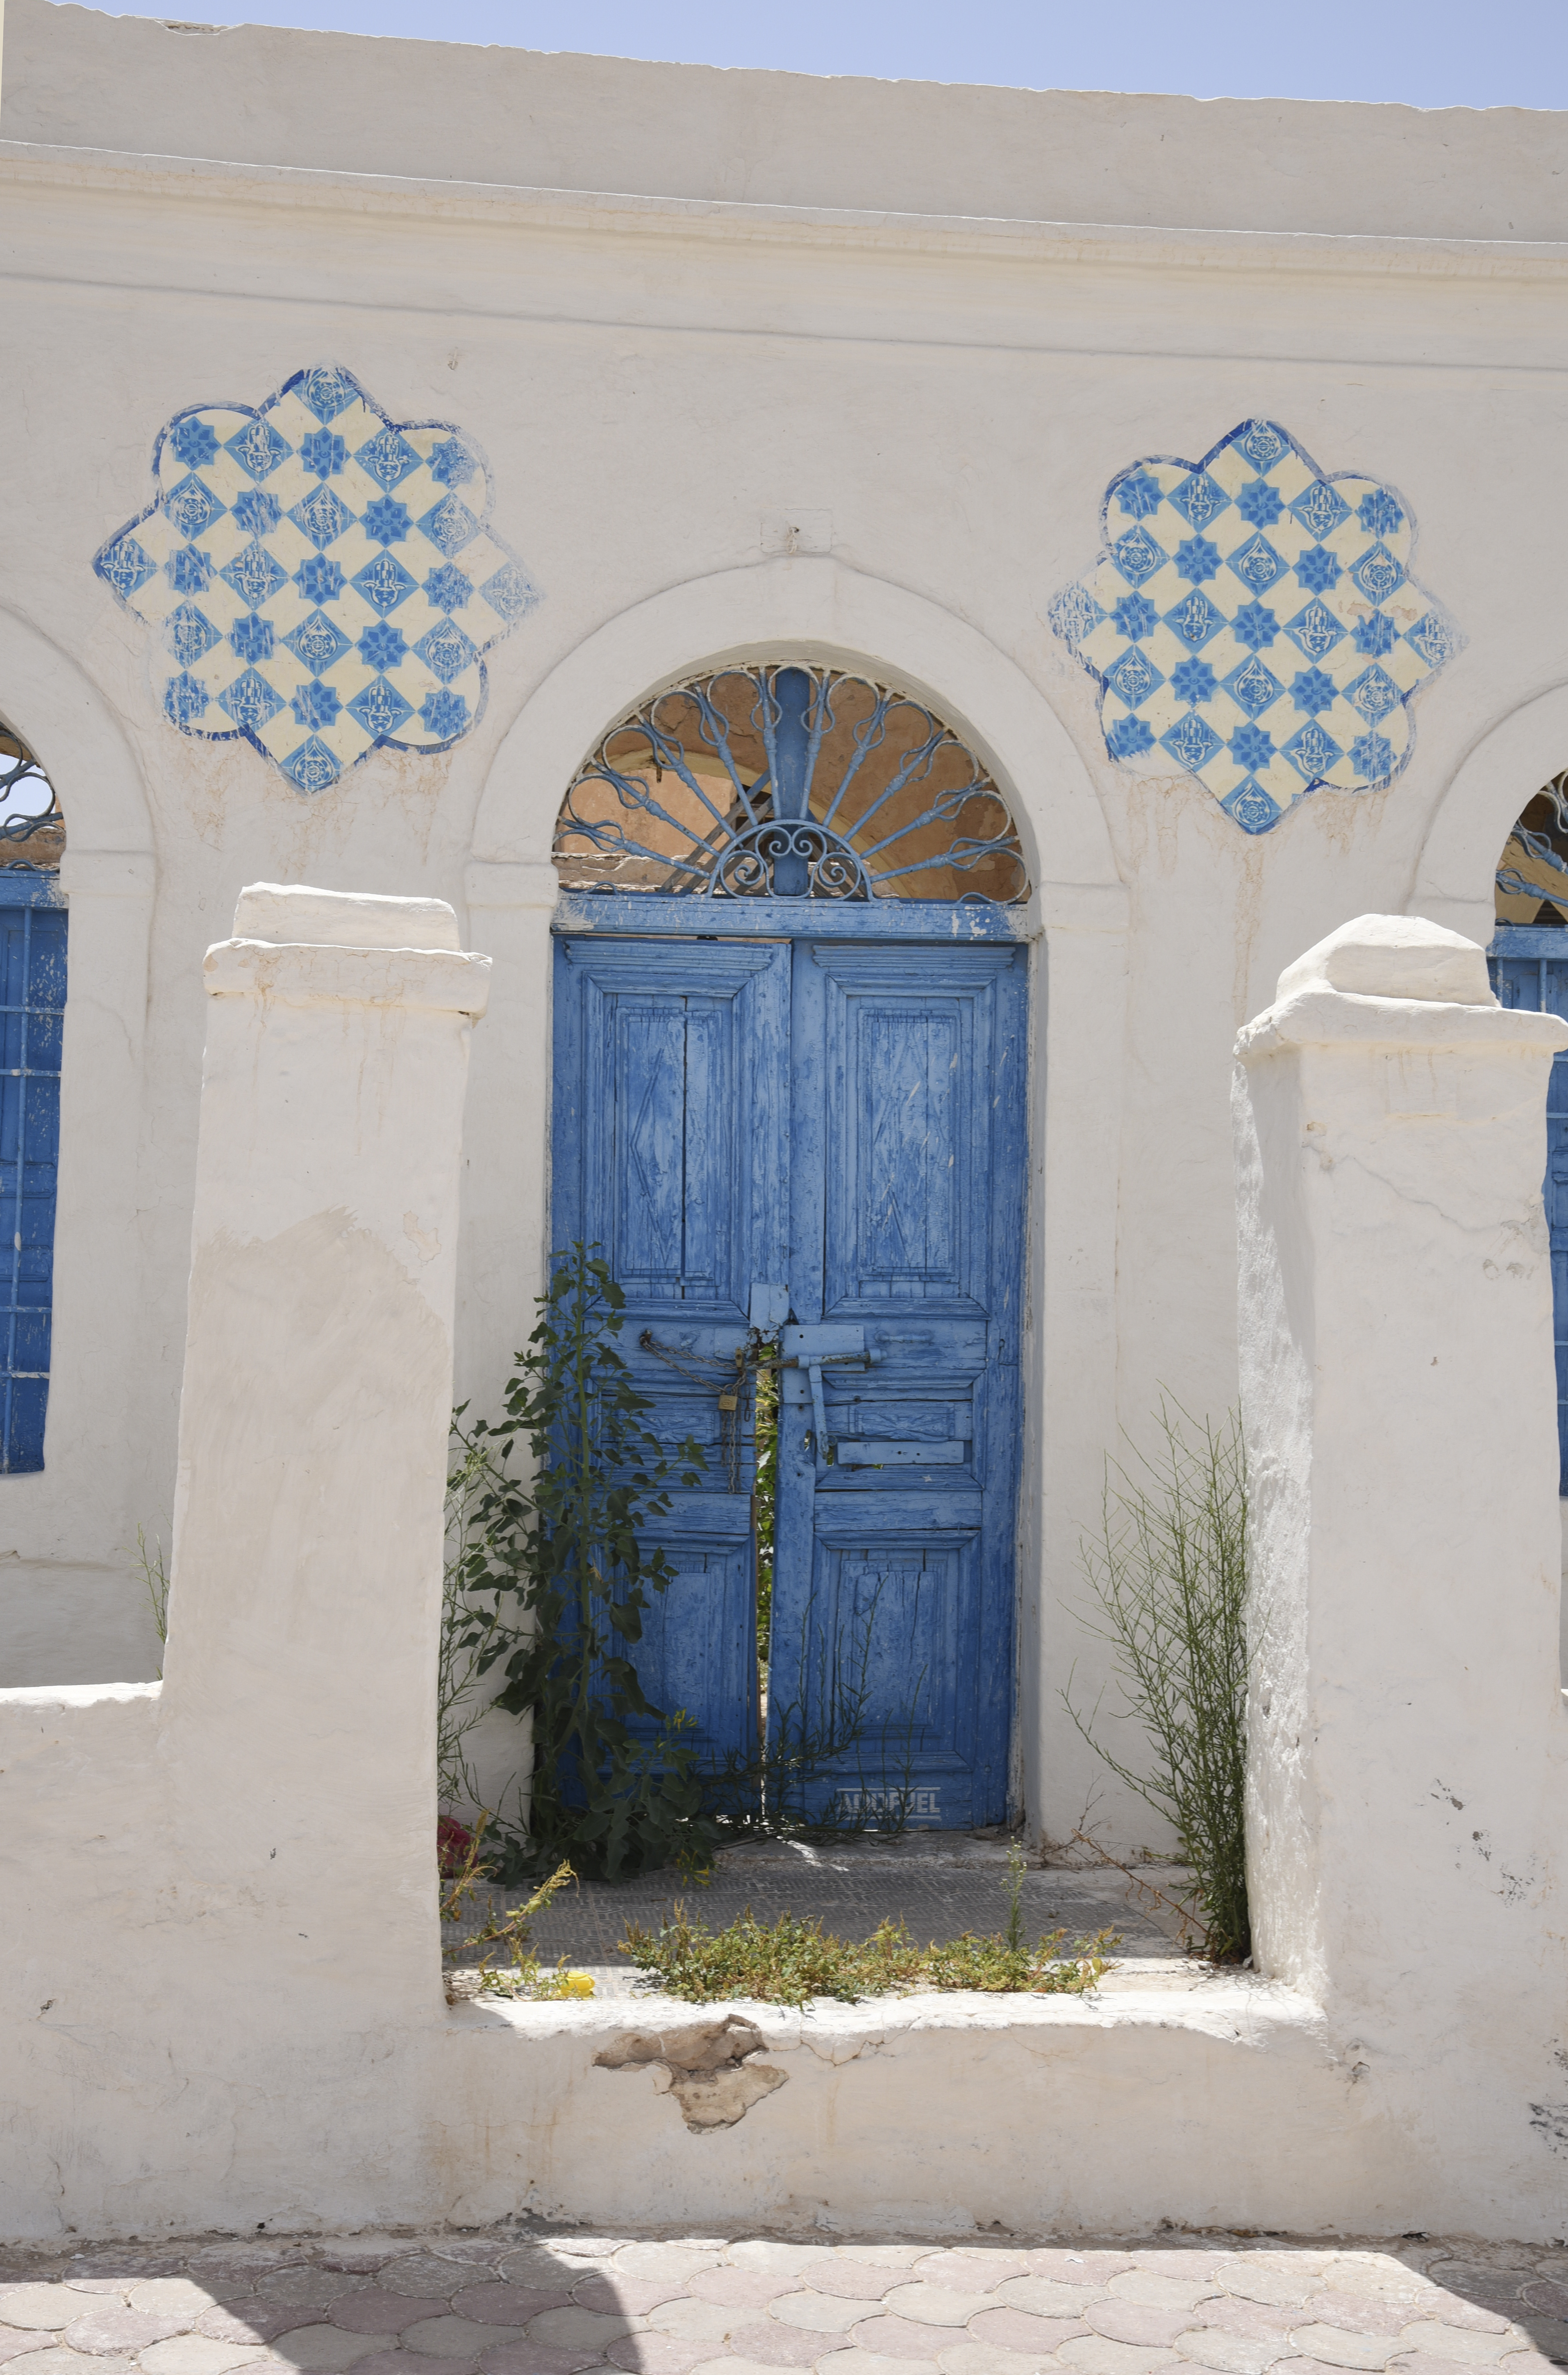 The Old Synagogue Small Quarter, Djerba (Jerba, Jarbah, جربة), Tunisia